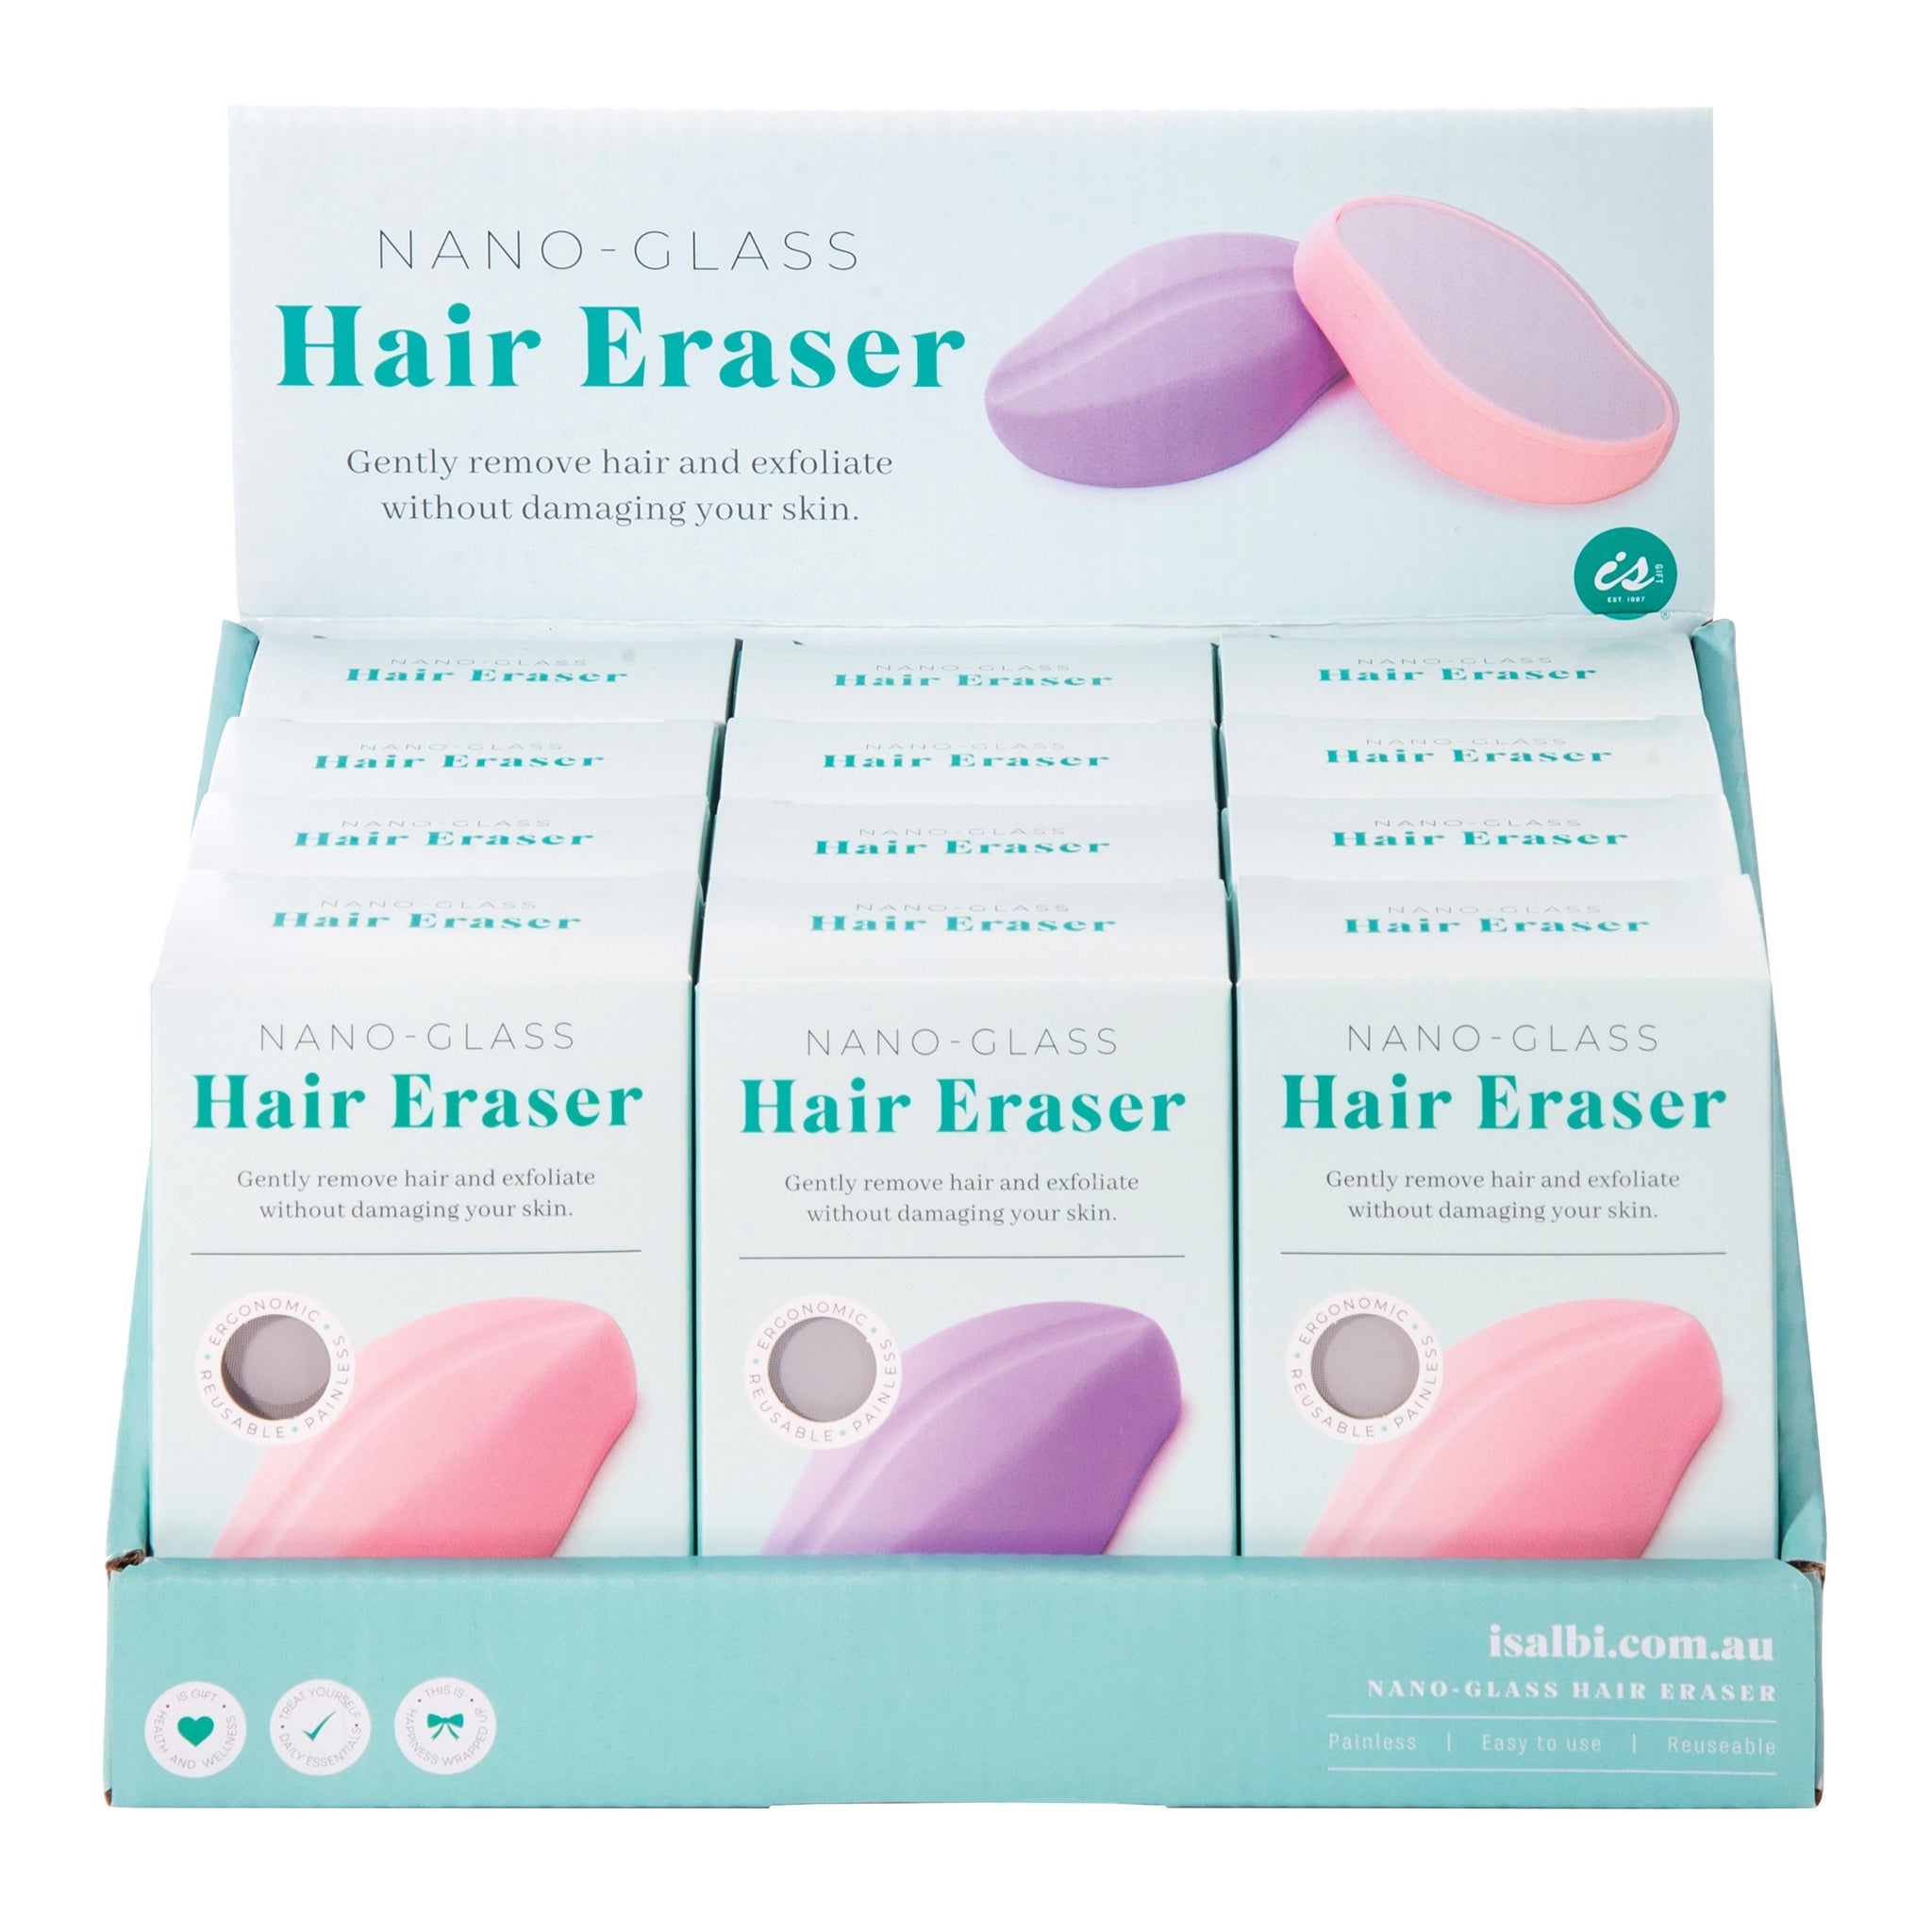 Nano-Glass Hair Eraser